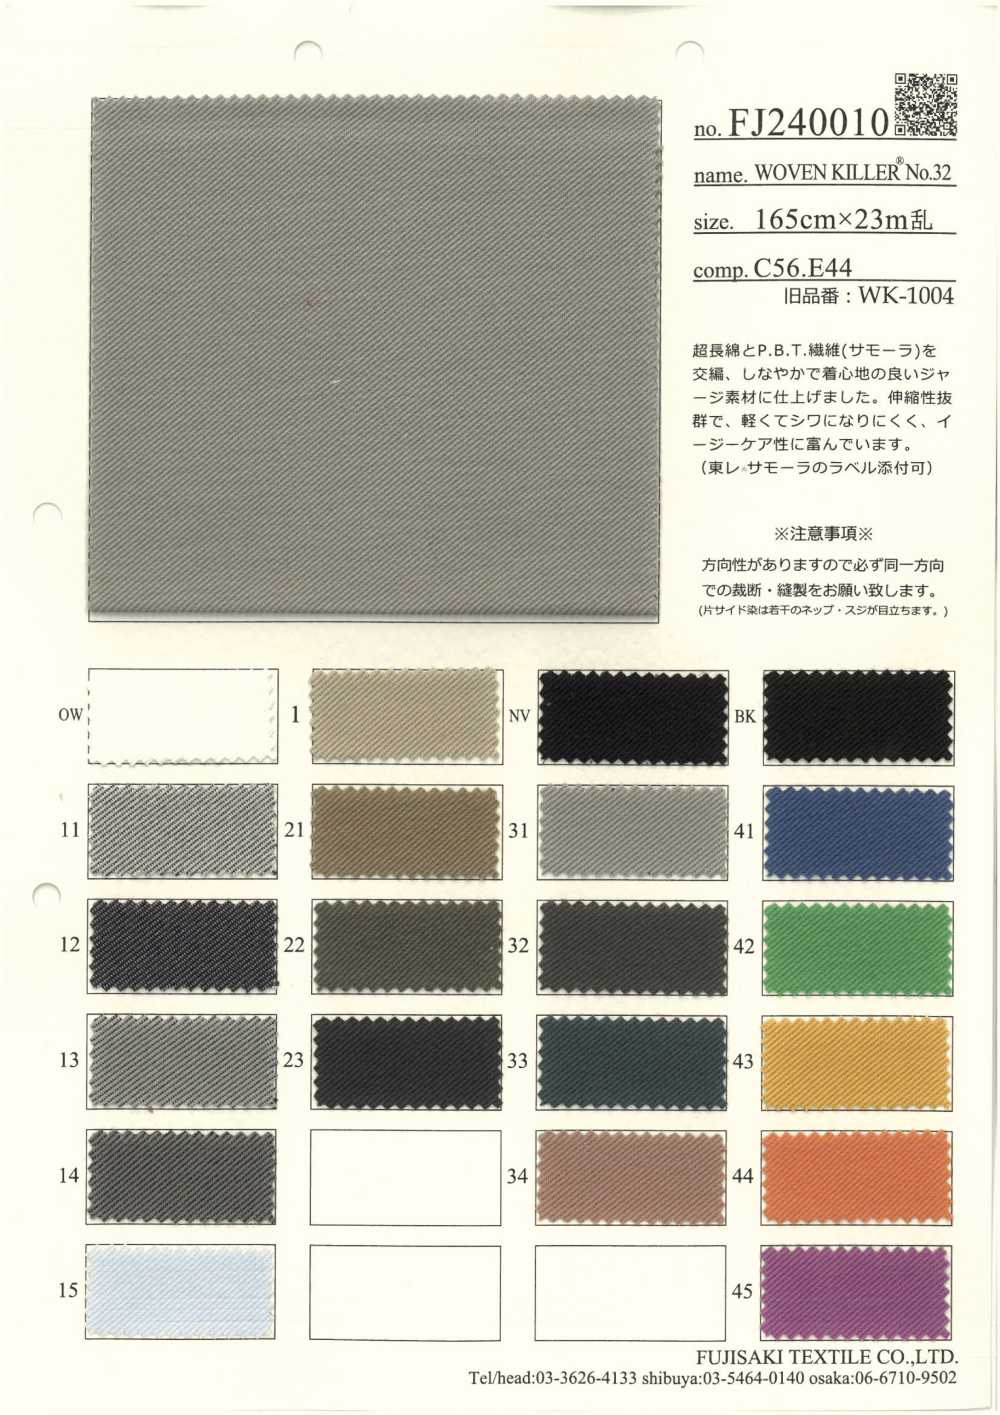 FJ240010 TUEUR DE WOVWEN[Fabrication De Textile] Fujisaki Textile